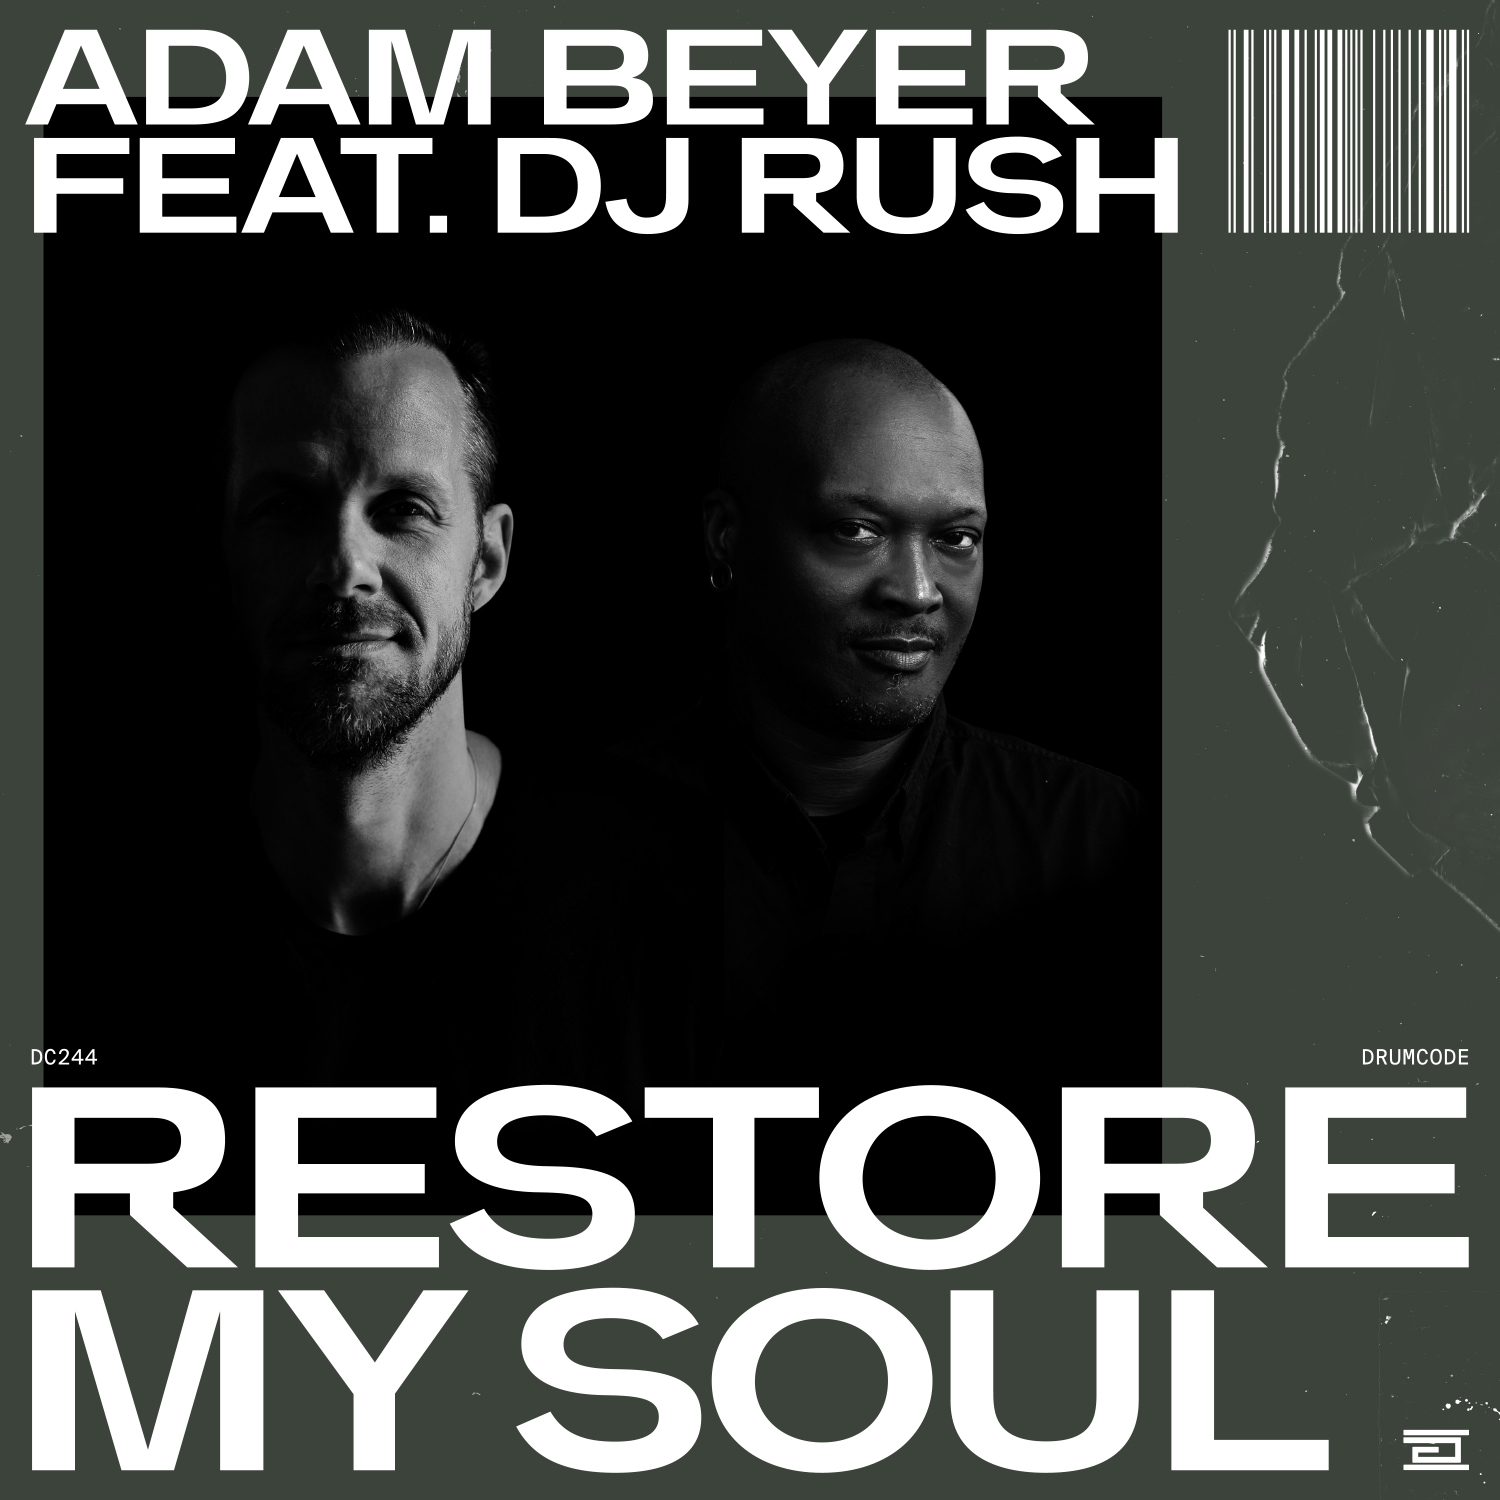 DJ Rush Makes Drumcode Debut With ‘Restore My Soul’